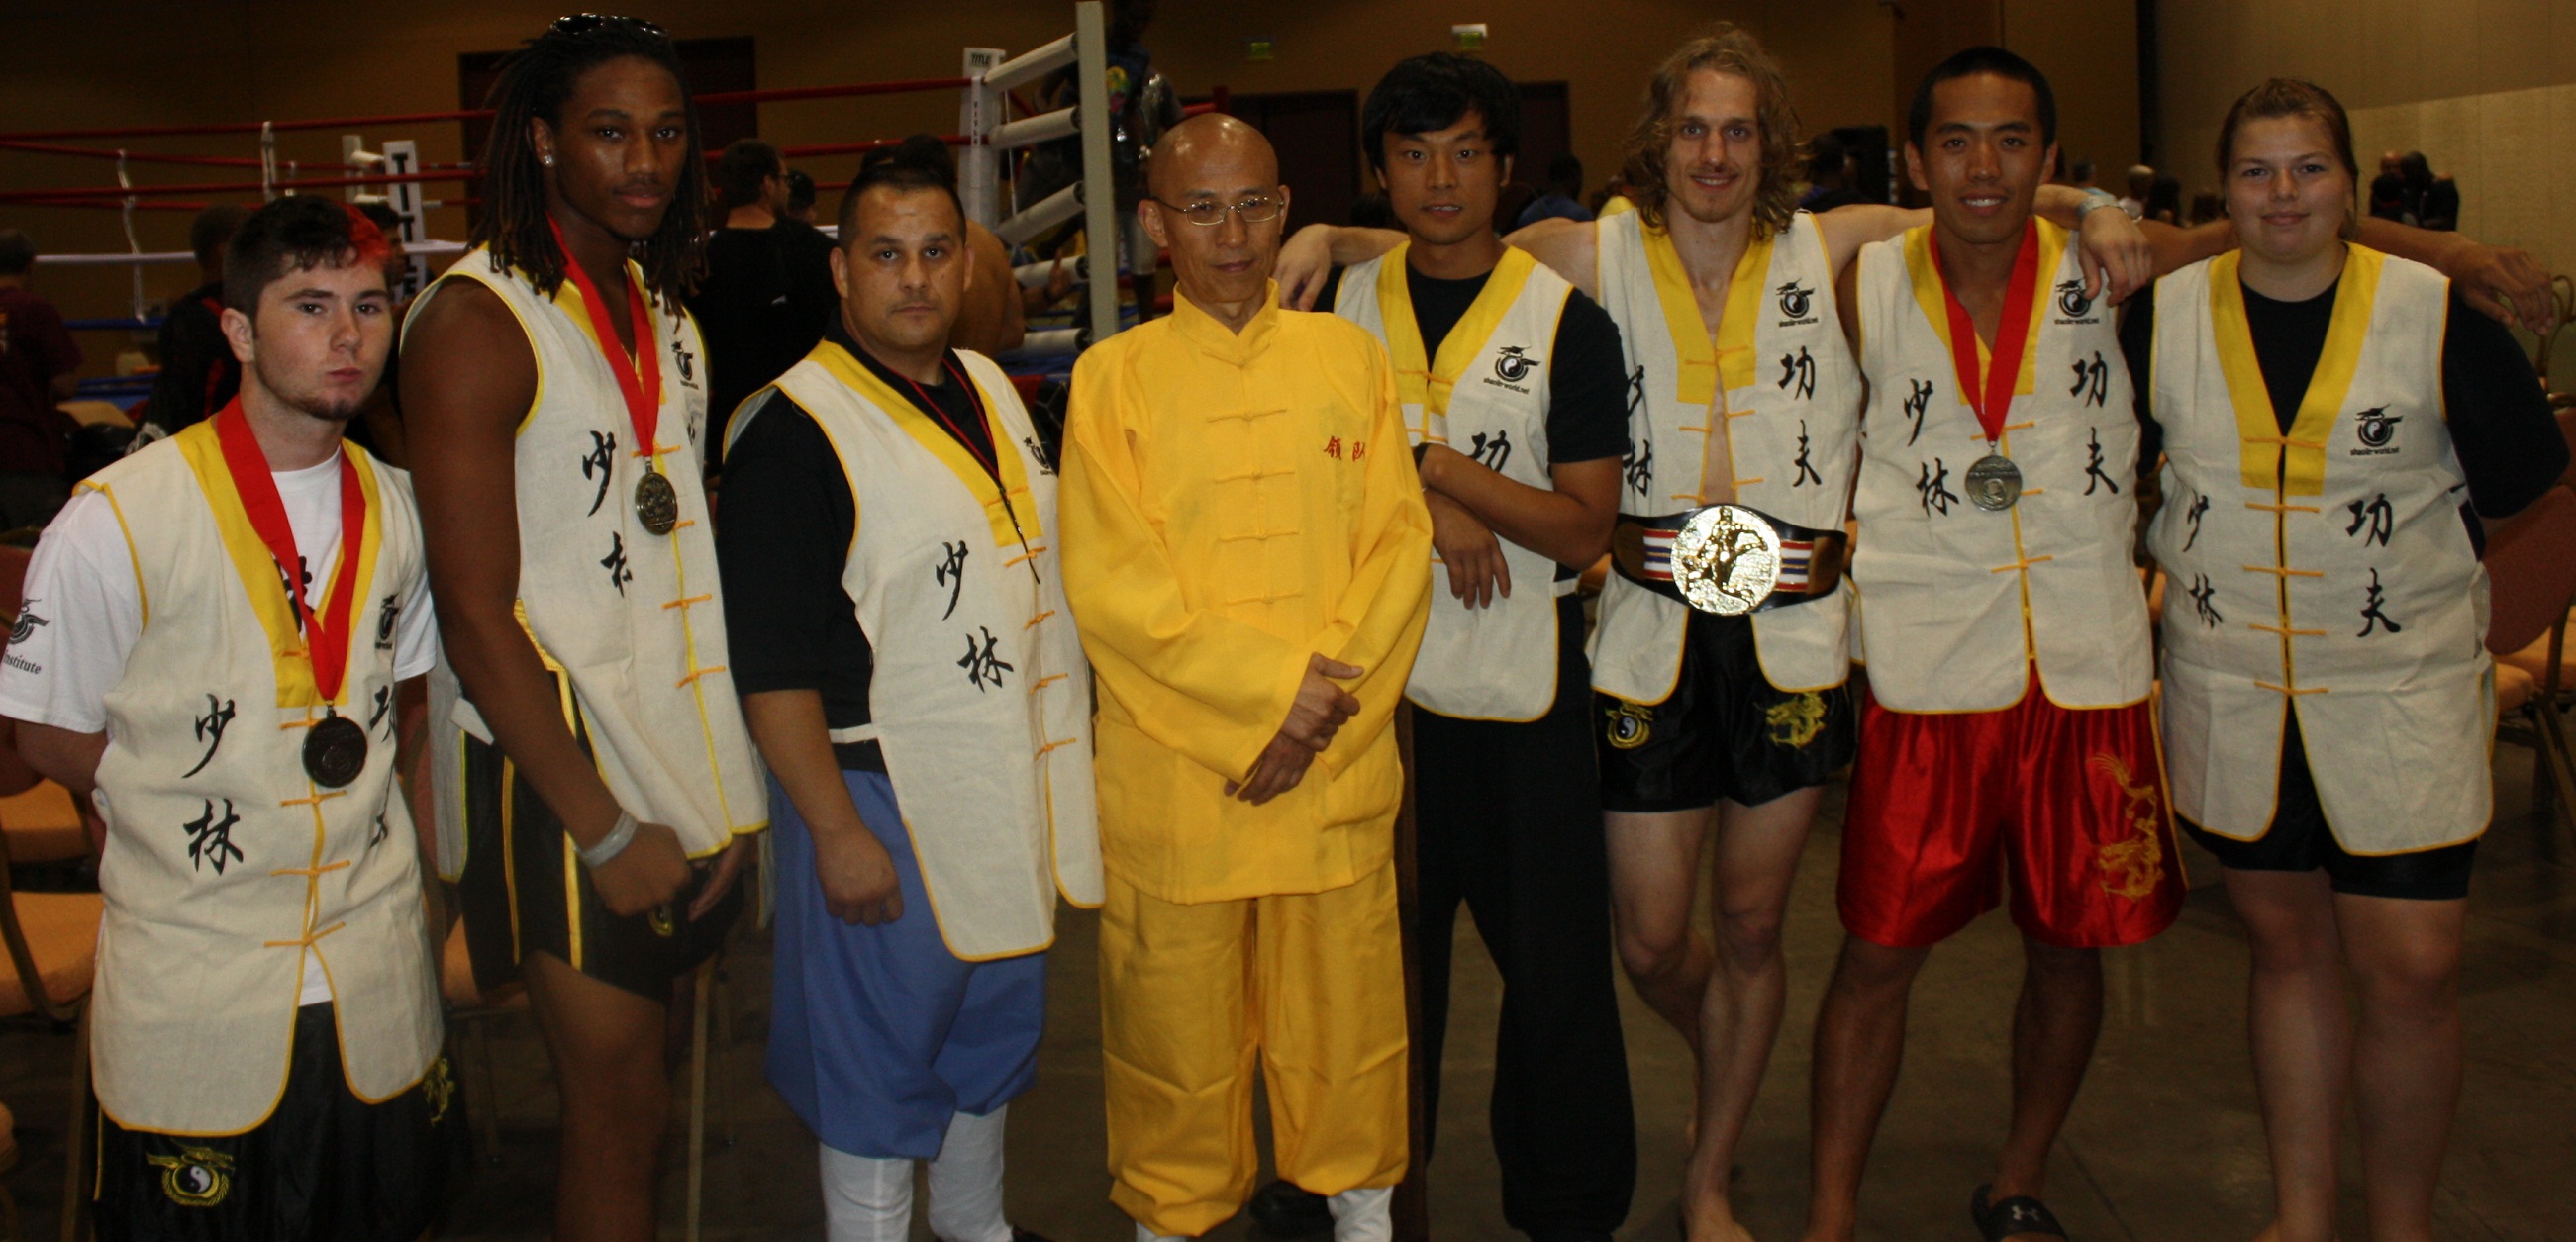 Shaolin Institute Sanda Team Members